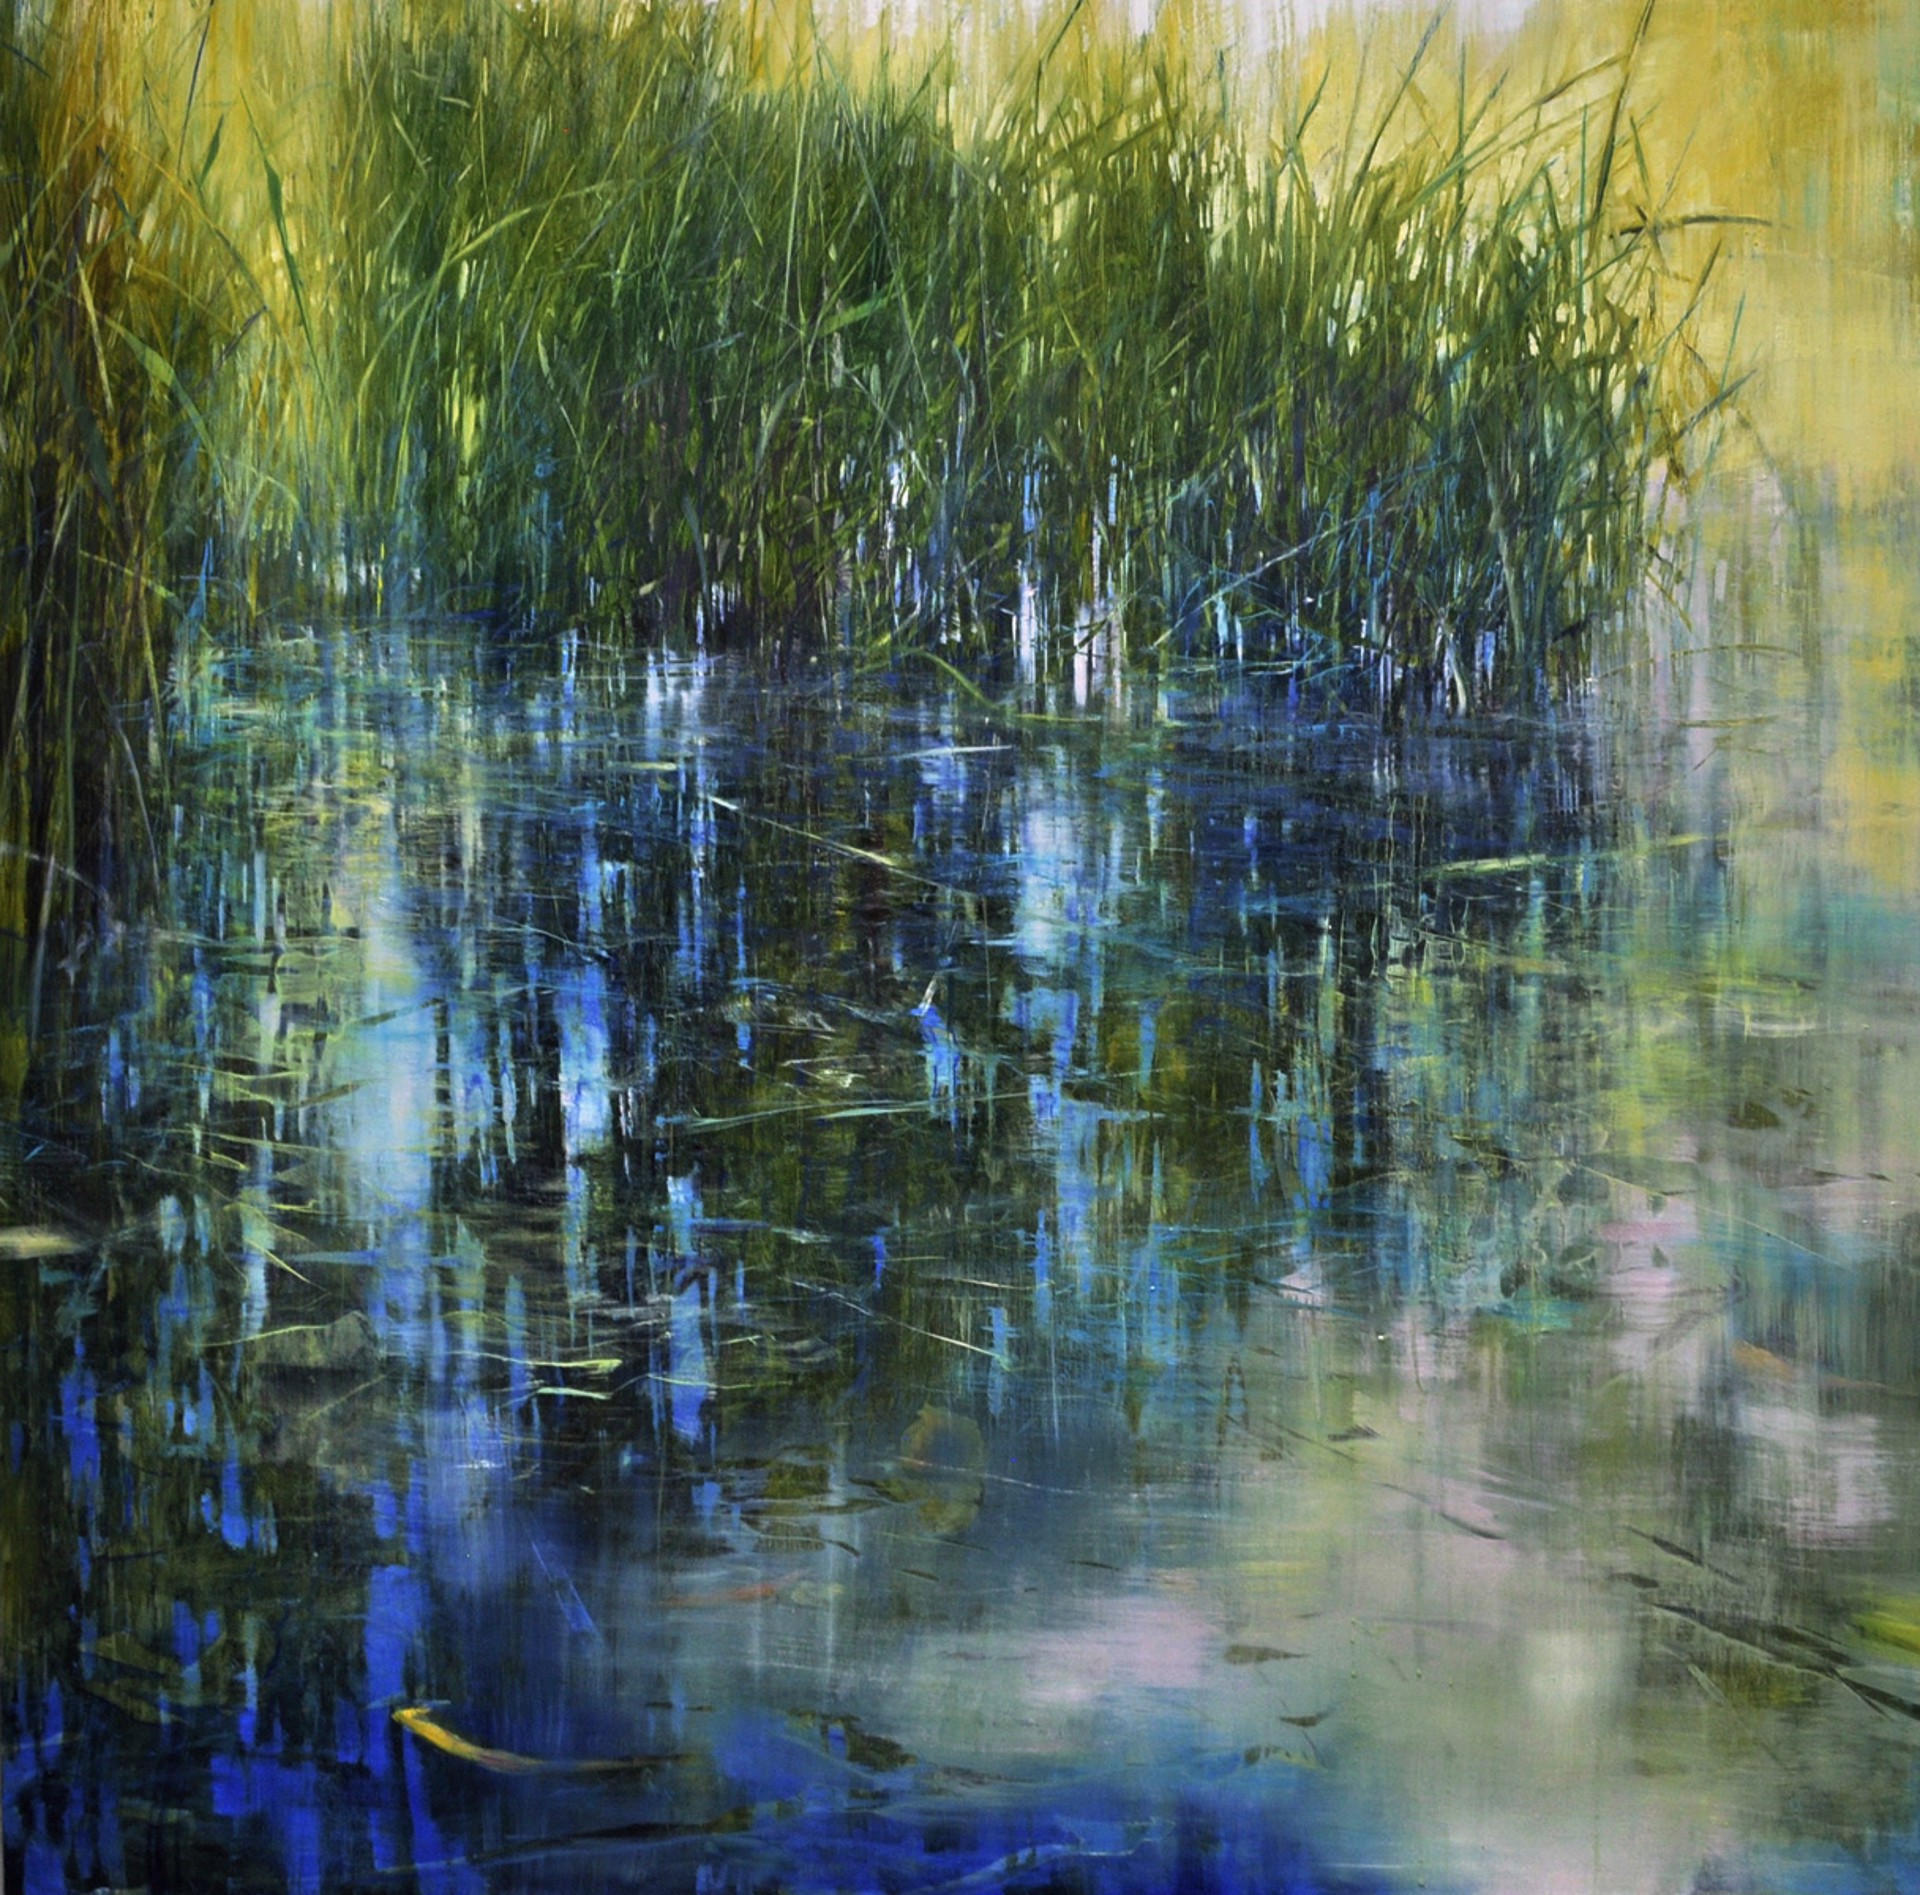 Summer Pond in Tall Grass by David Dunlop